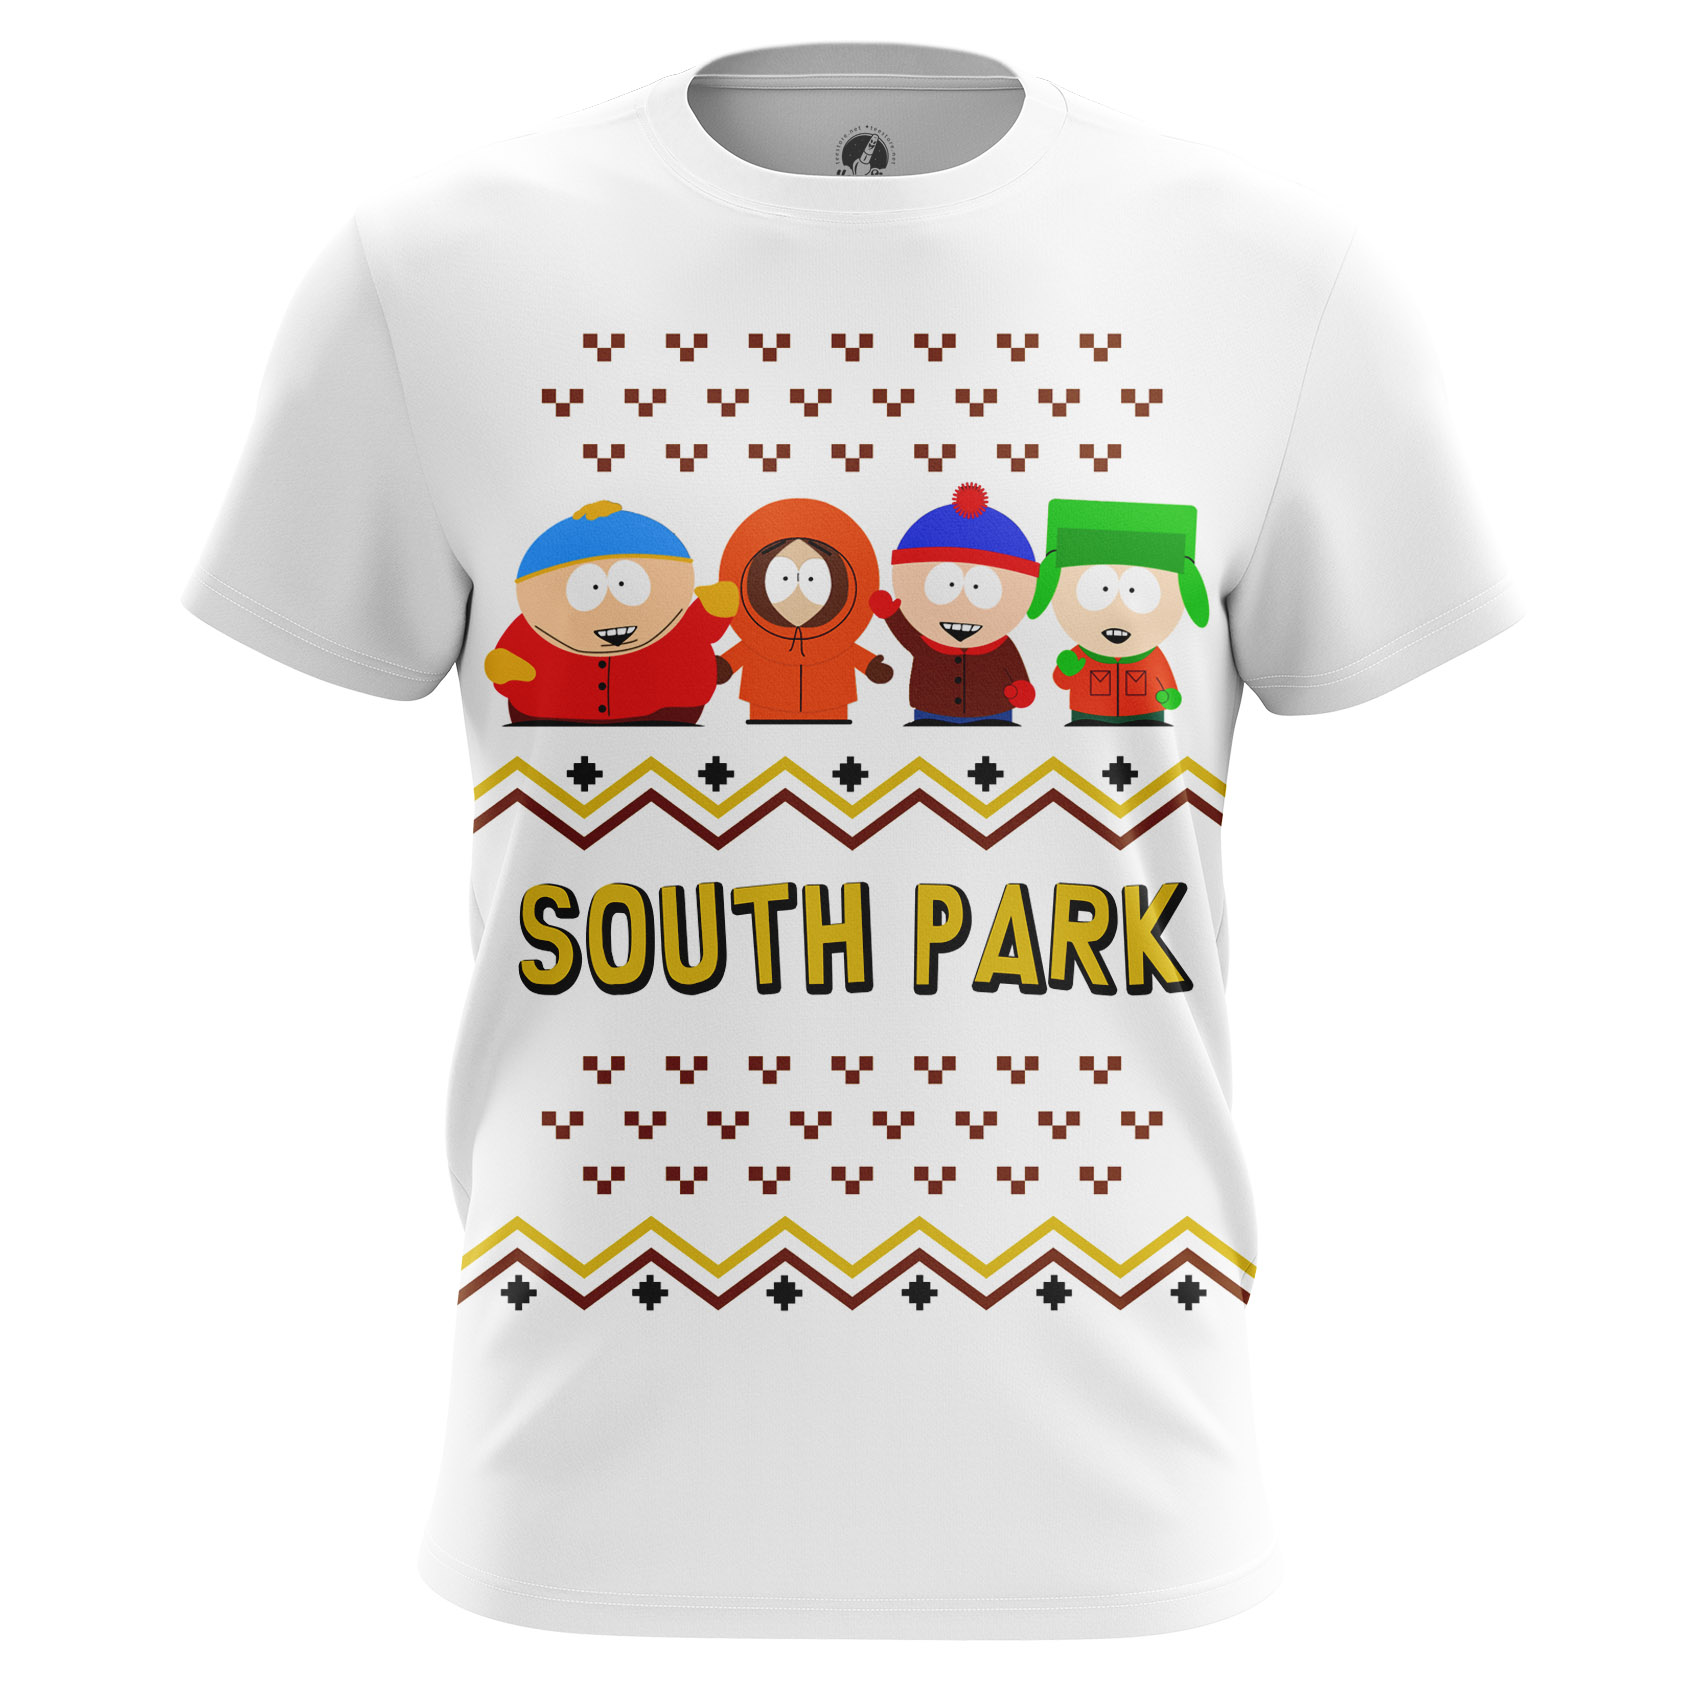 South Park Merch  The Ultimate South Park Merchandise Store